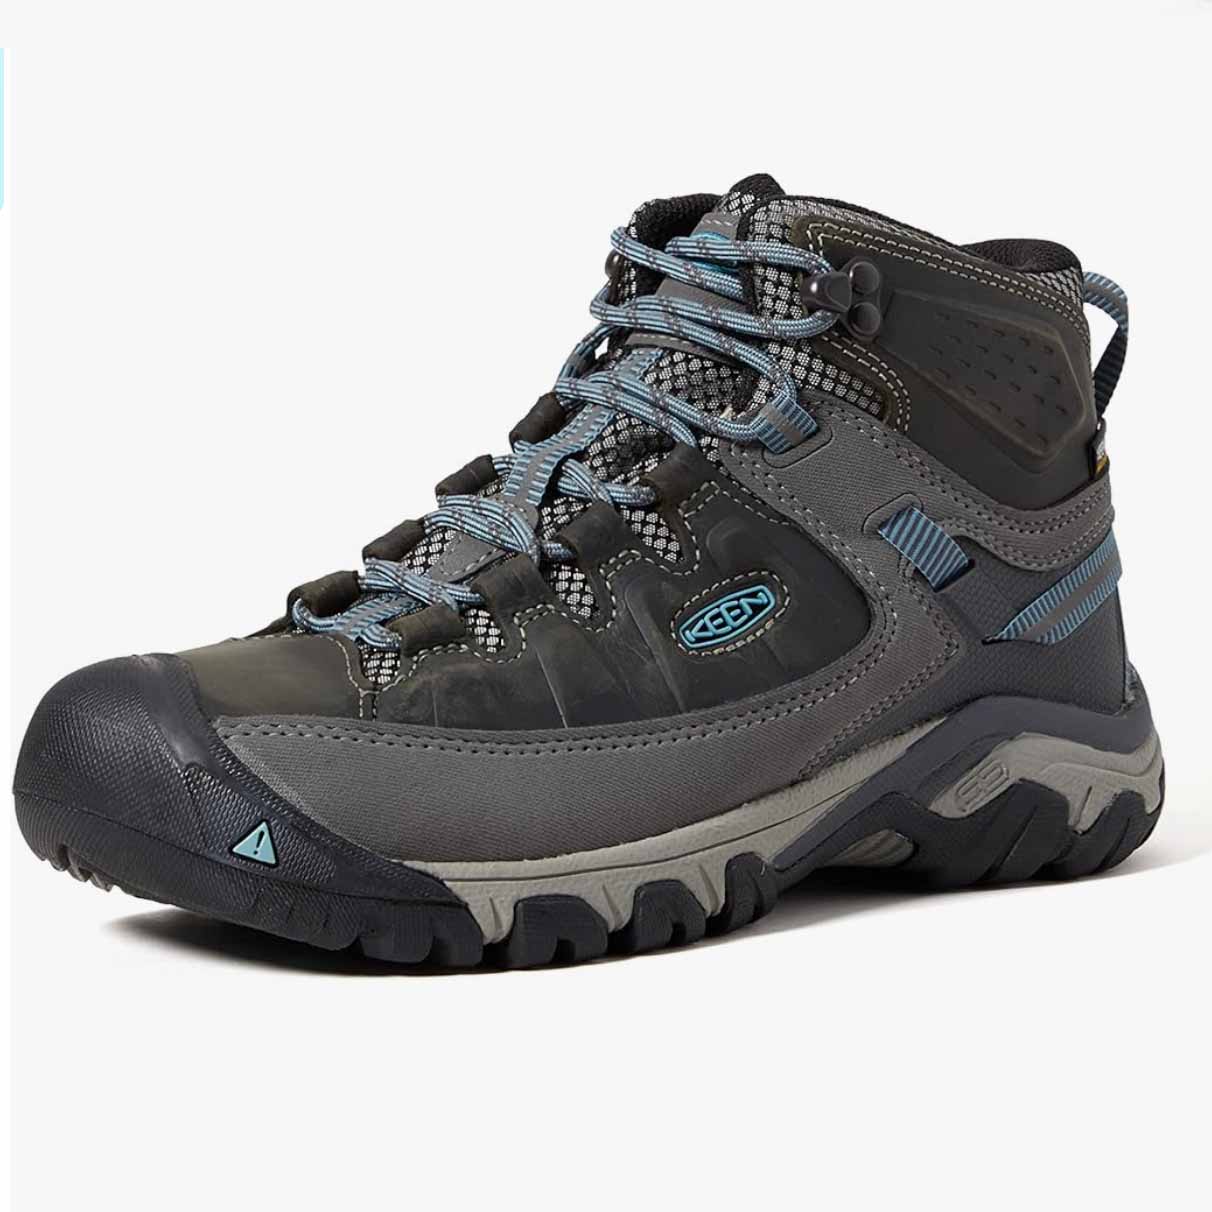 Dark grey Keen Targhee III Mid Height Waterproof Hiking Boot